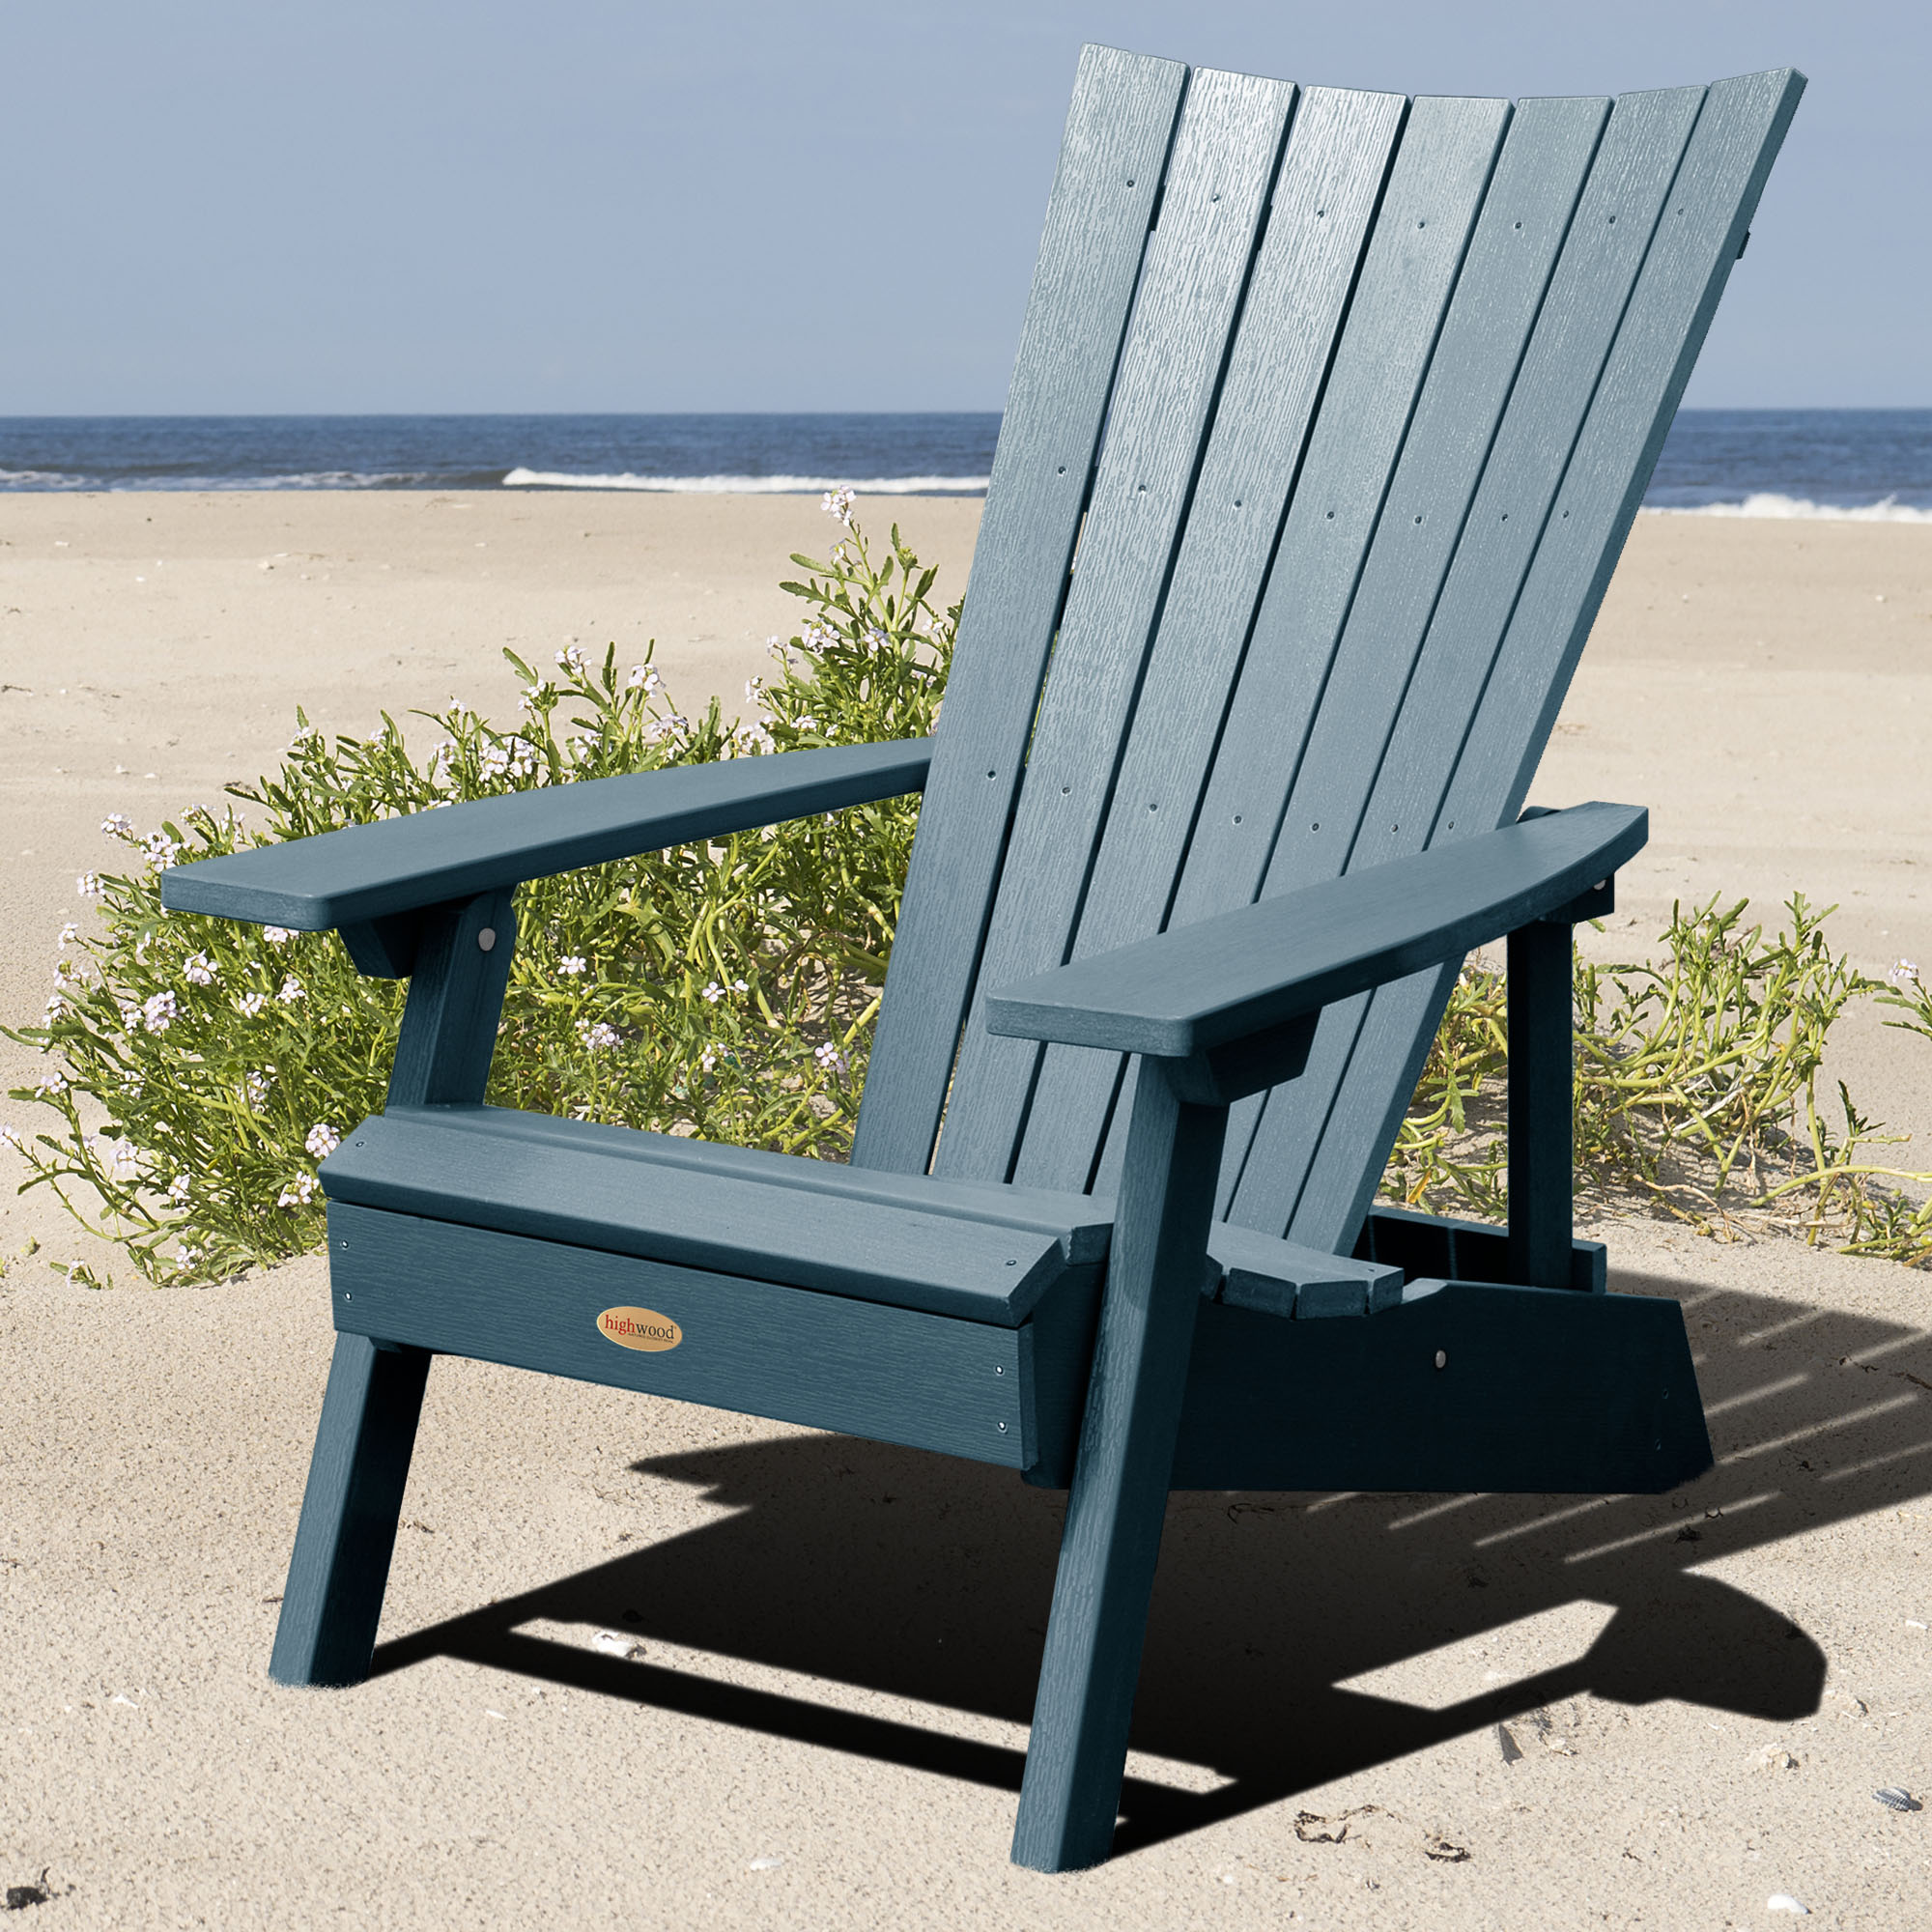 Highwood Manhattan Beach Adirondack Chair with Folding Ottoman - image 4 of 6